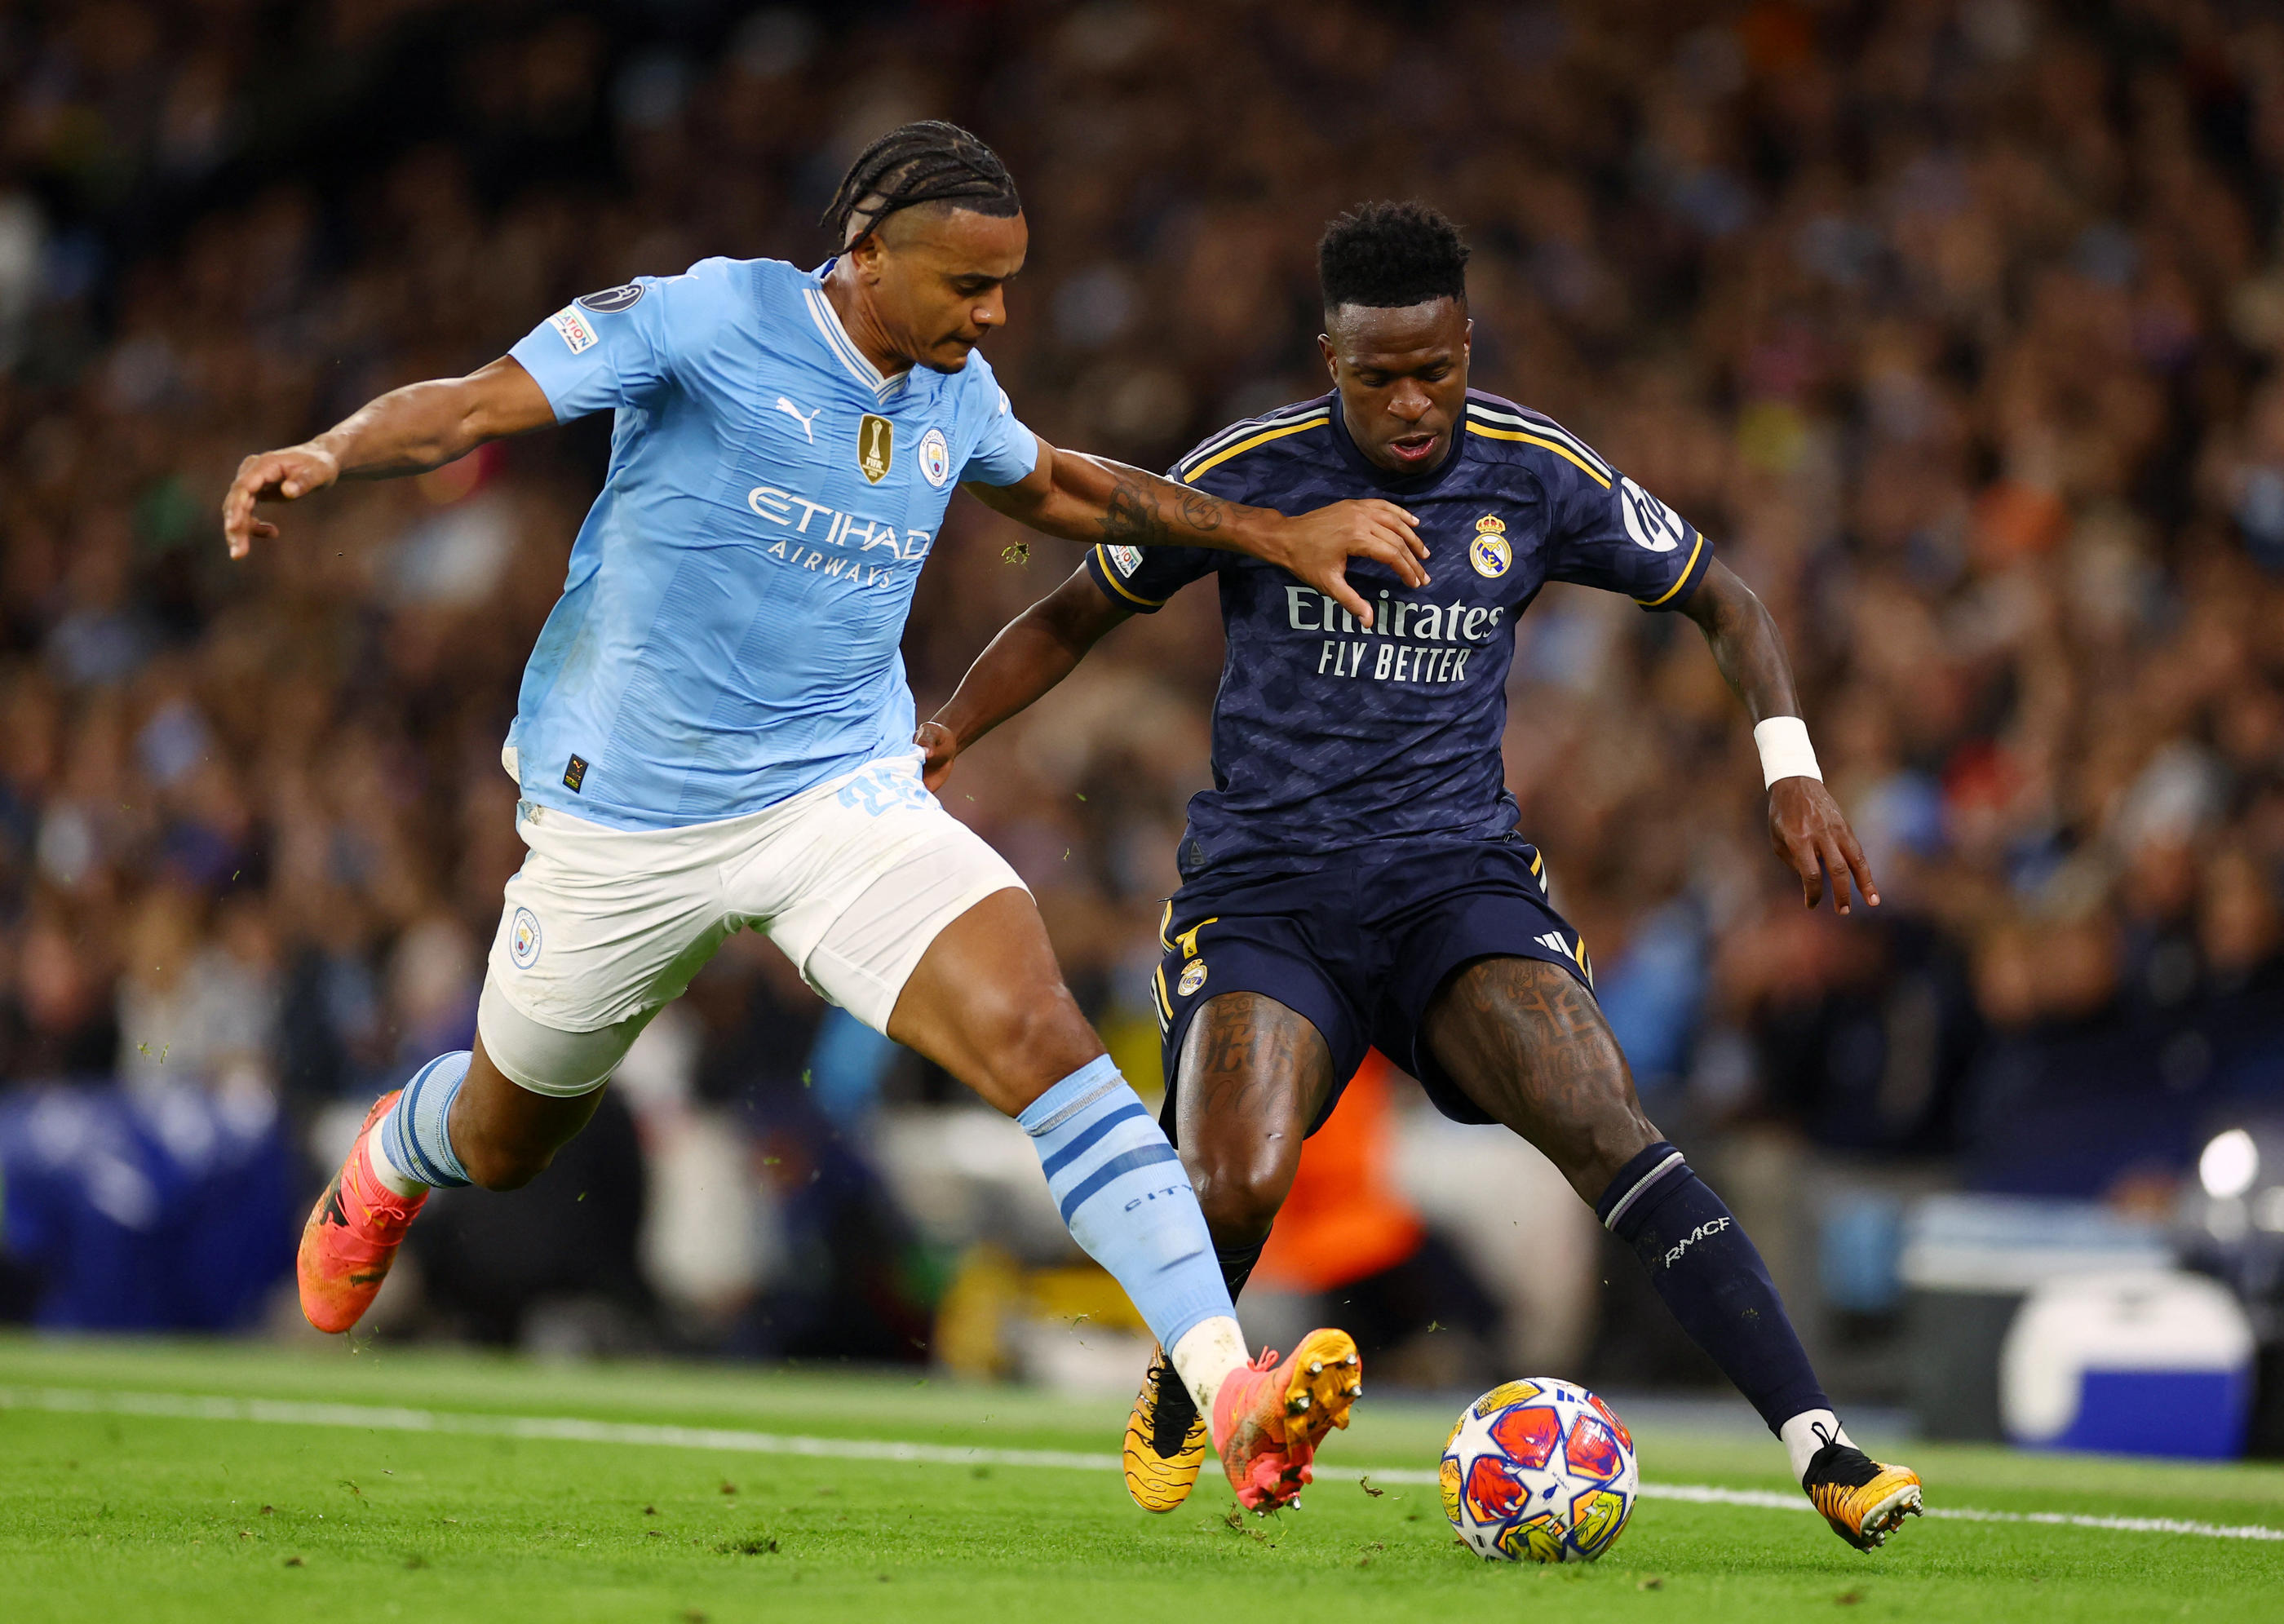 Manuel Akanji au duel avec Vinicius lors de ce Manchester City - Real Madrid. (REUTERS/Carl Recine)